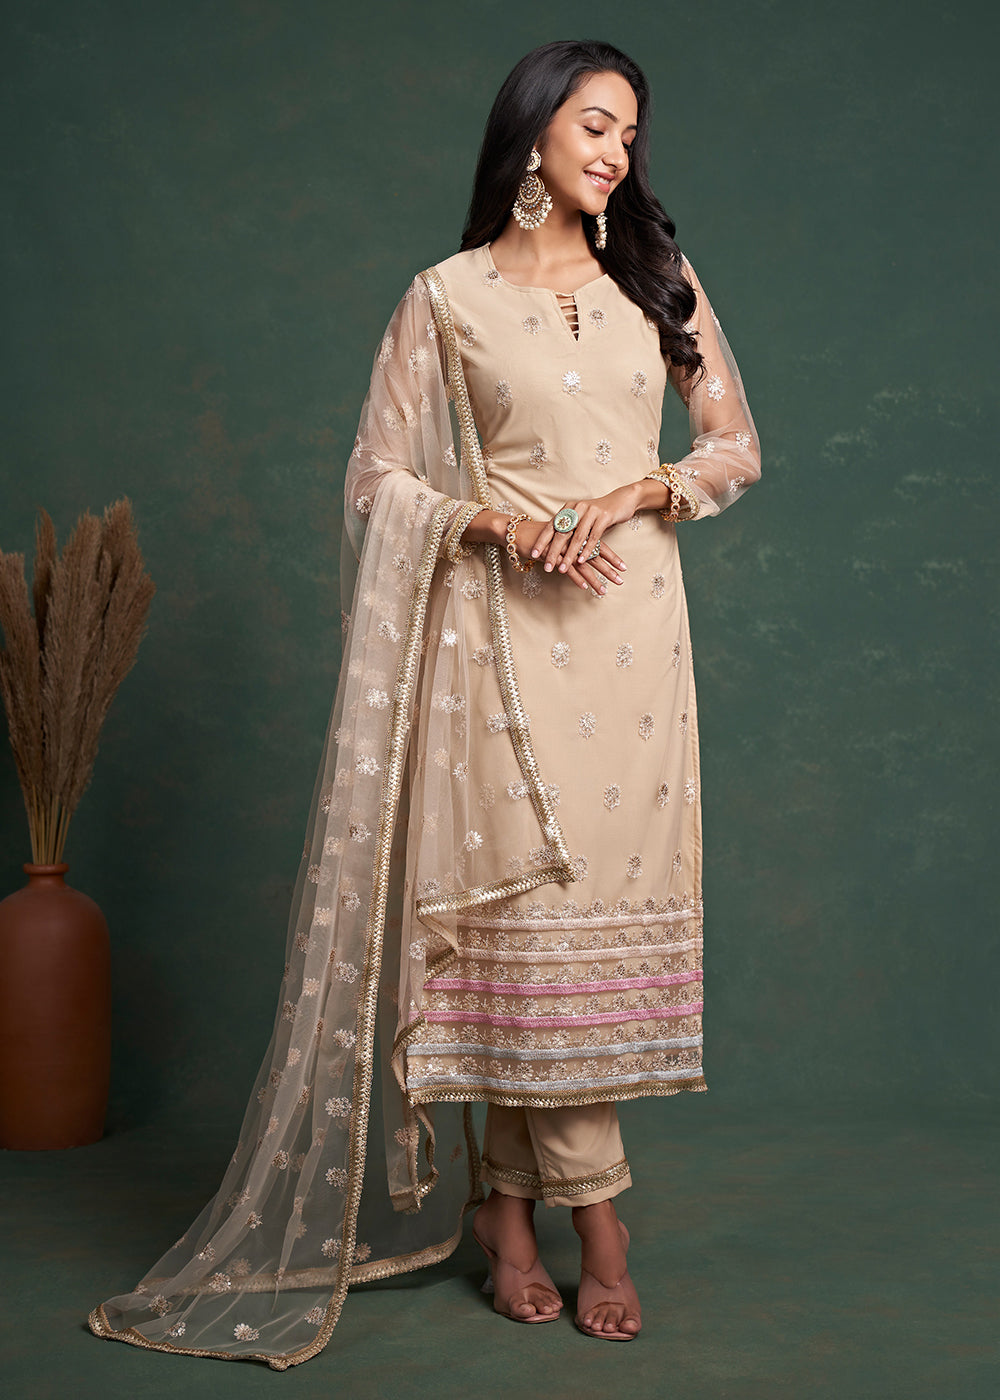 Buy Now Fabulous Beige Zari & Sequins Work Net Wedding Wear Salwar Suit Online in USA, UK, Canada, Germany, Australia & Worldwide at Empress Clothing.